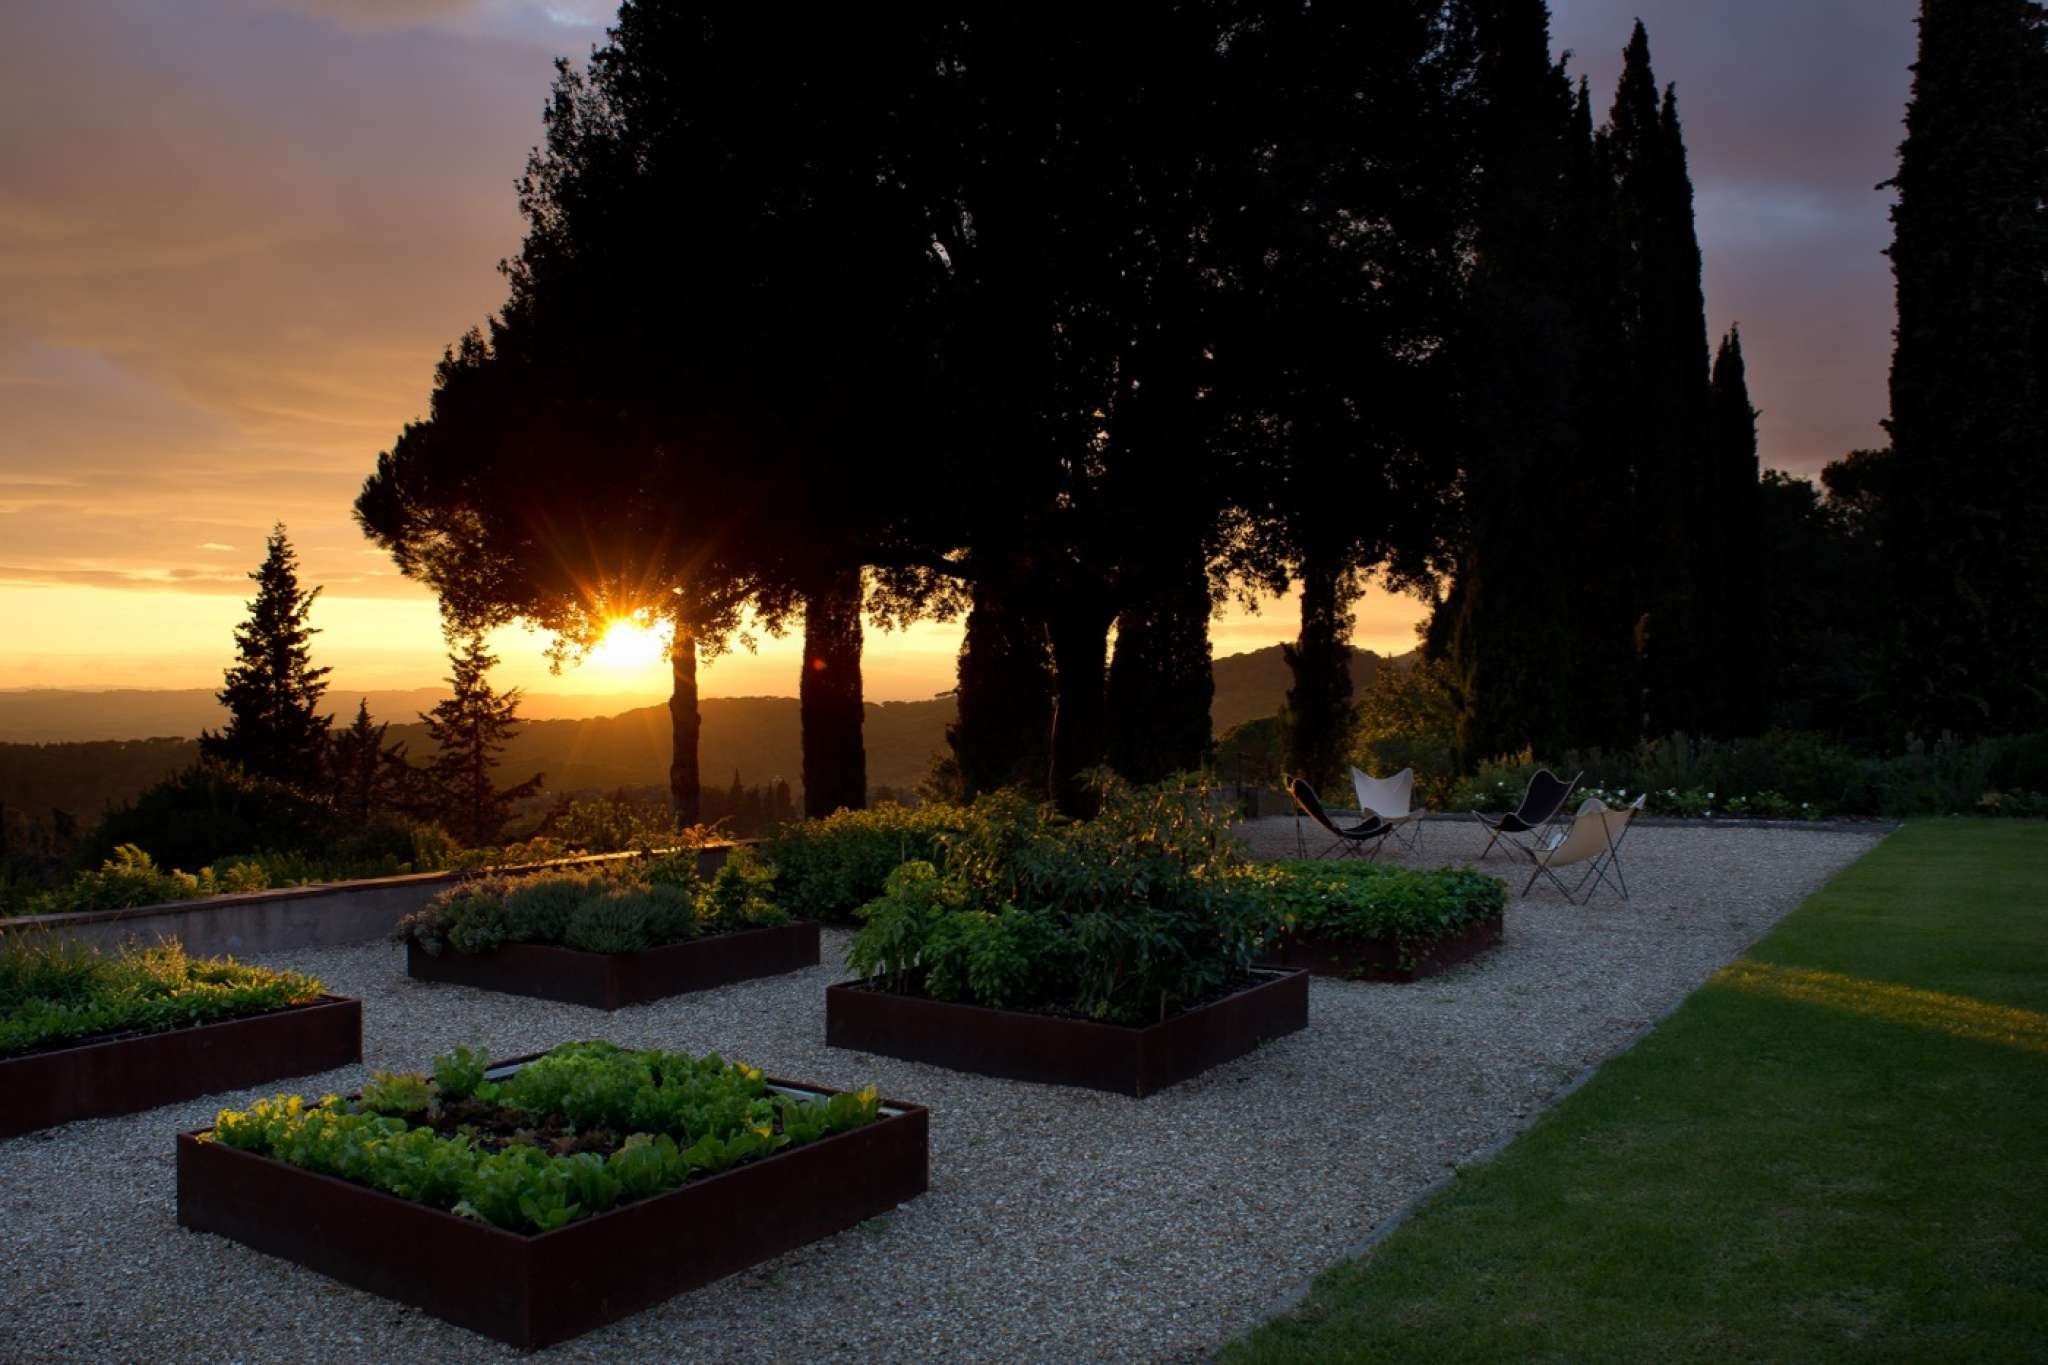 Francis York Villa La Tavernaccia: Luxury Villa Rental Near Florence, Italy 26.jpg